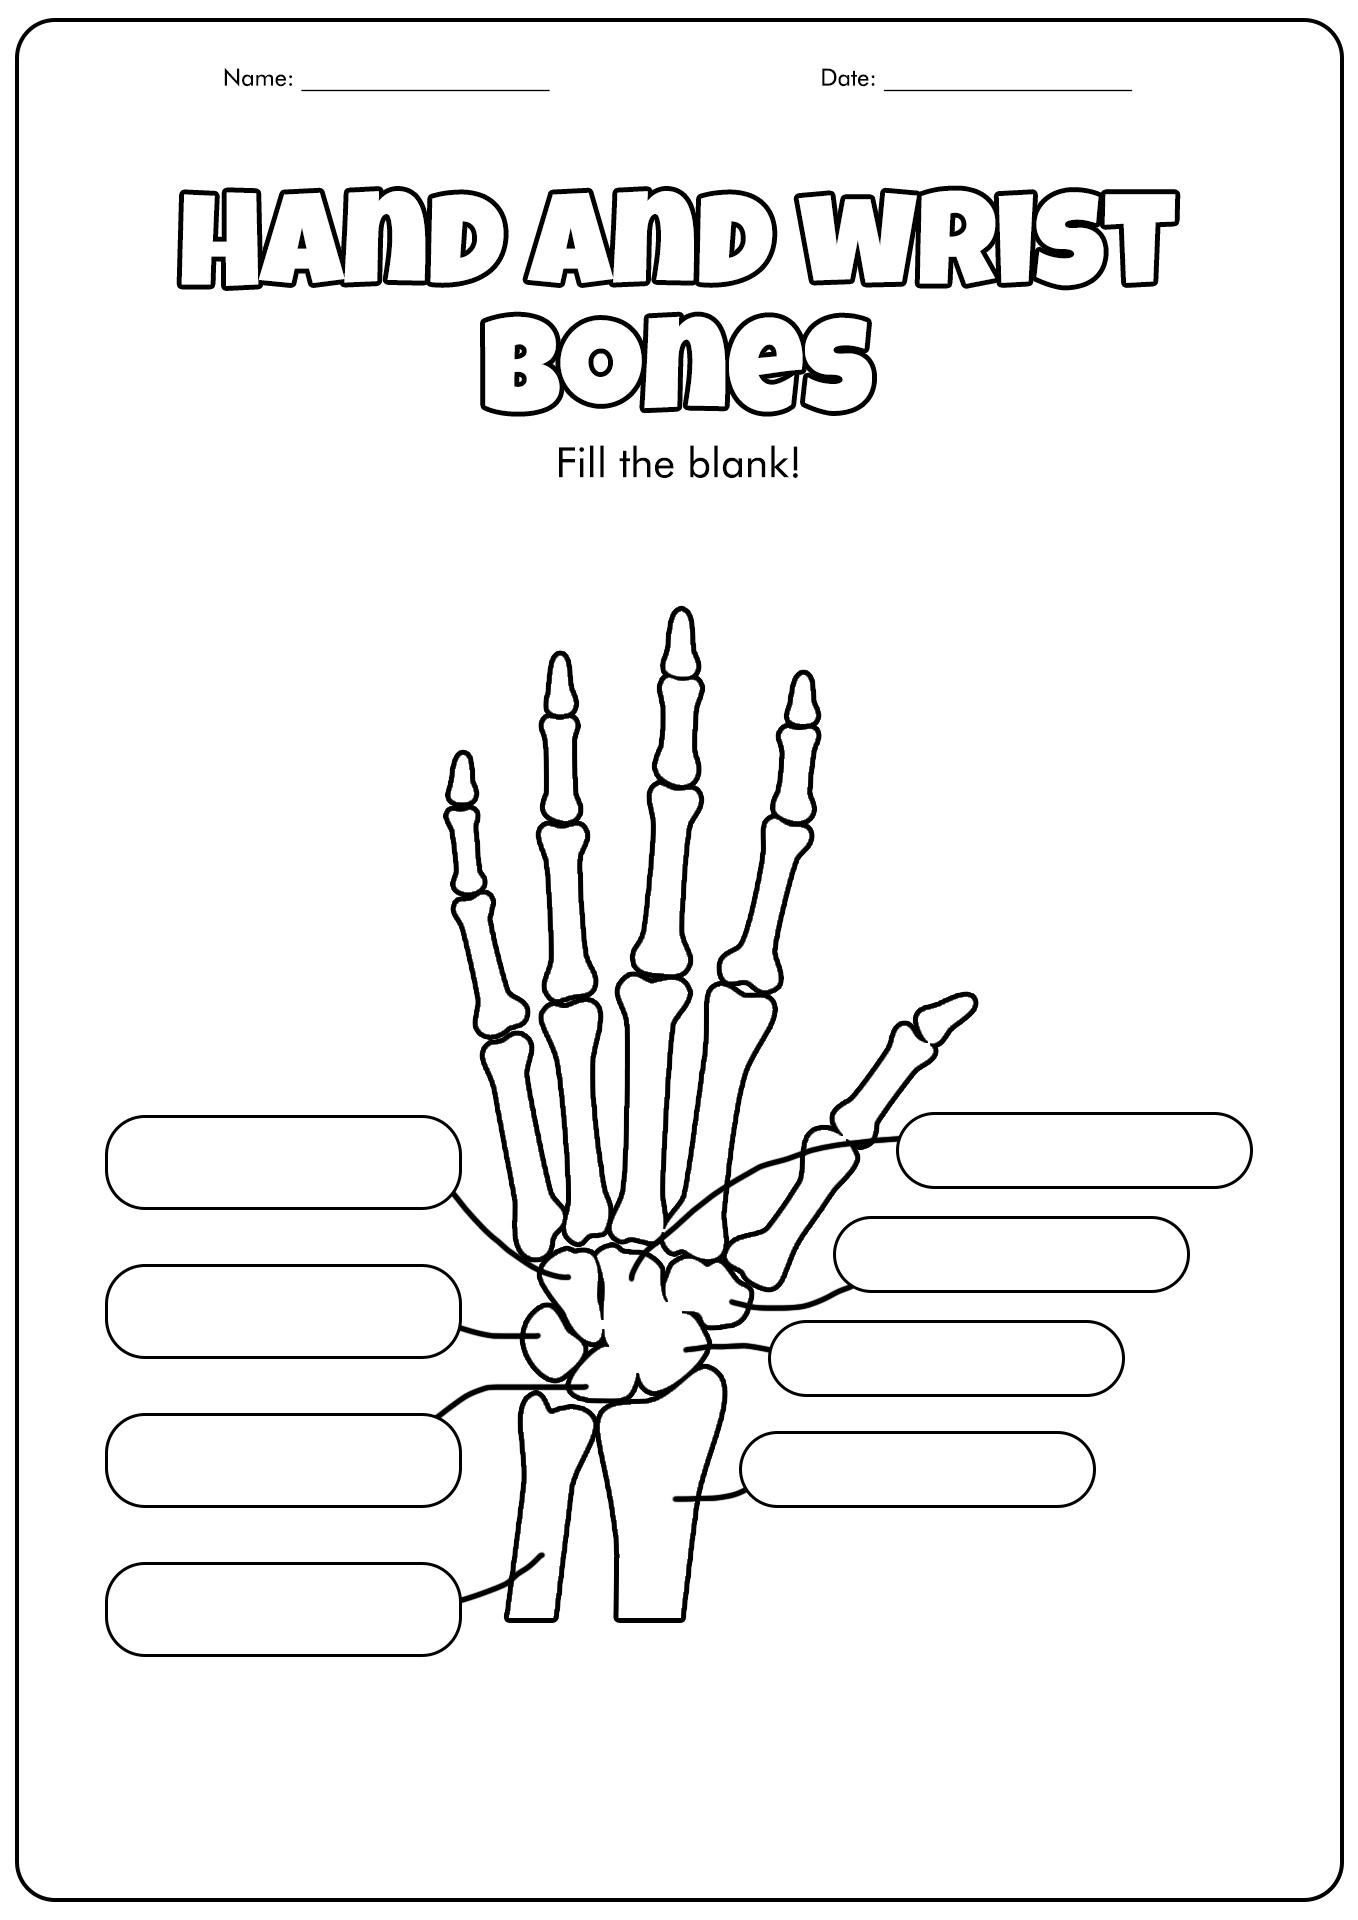 Hand and Wrist Bones Diagram